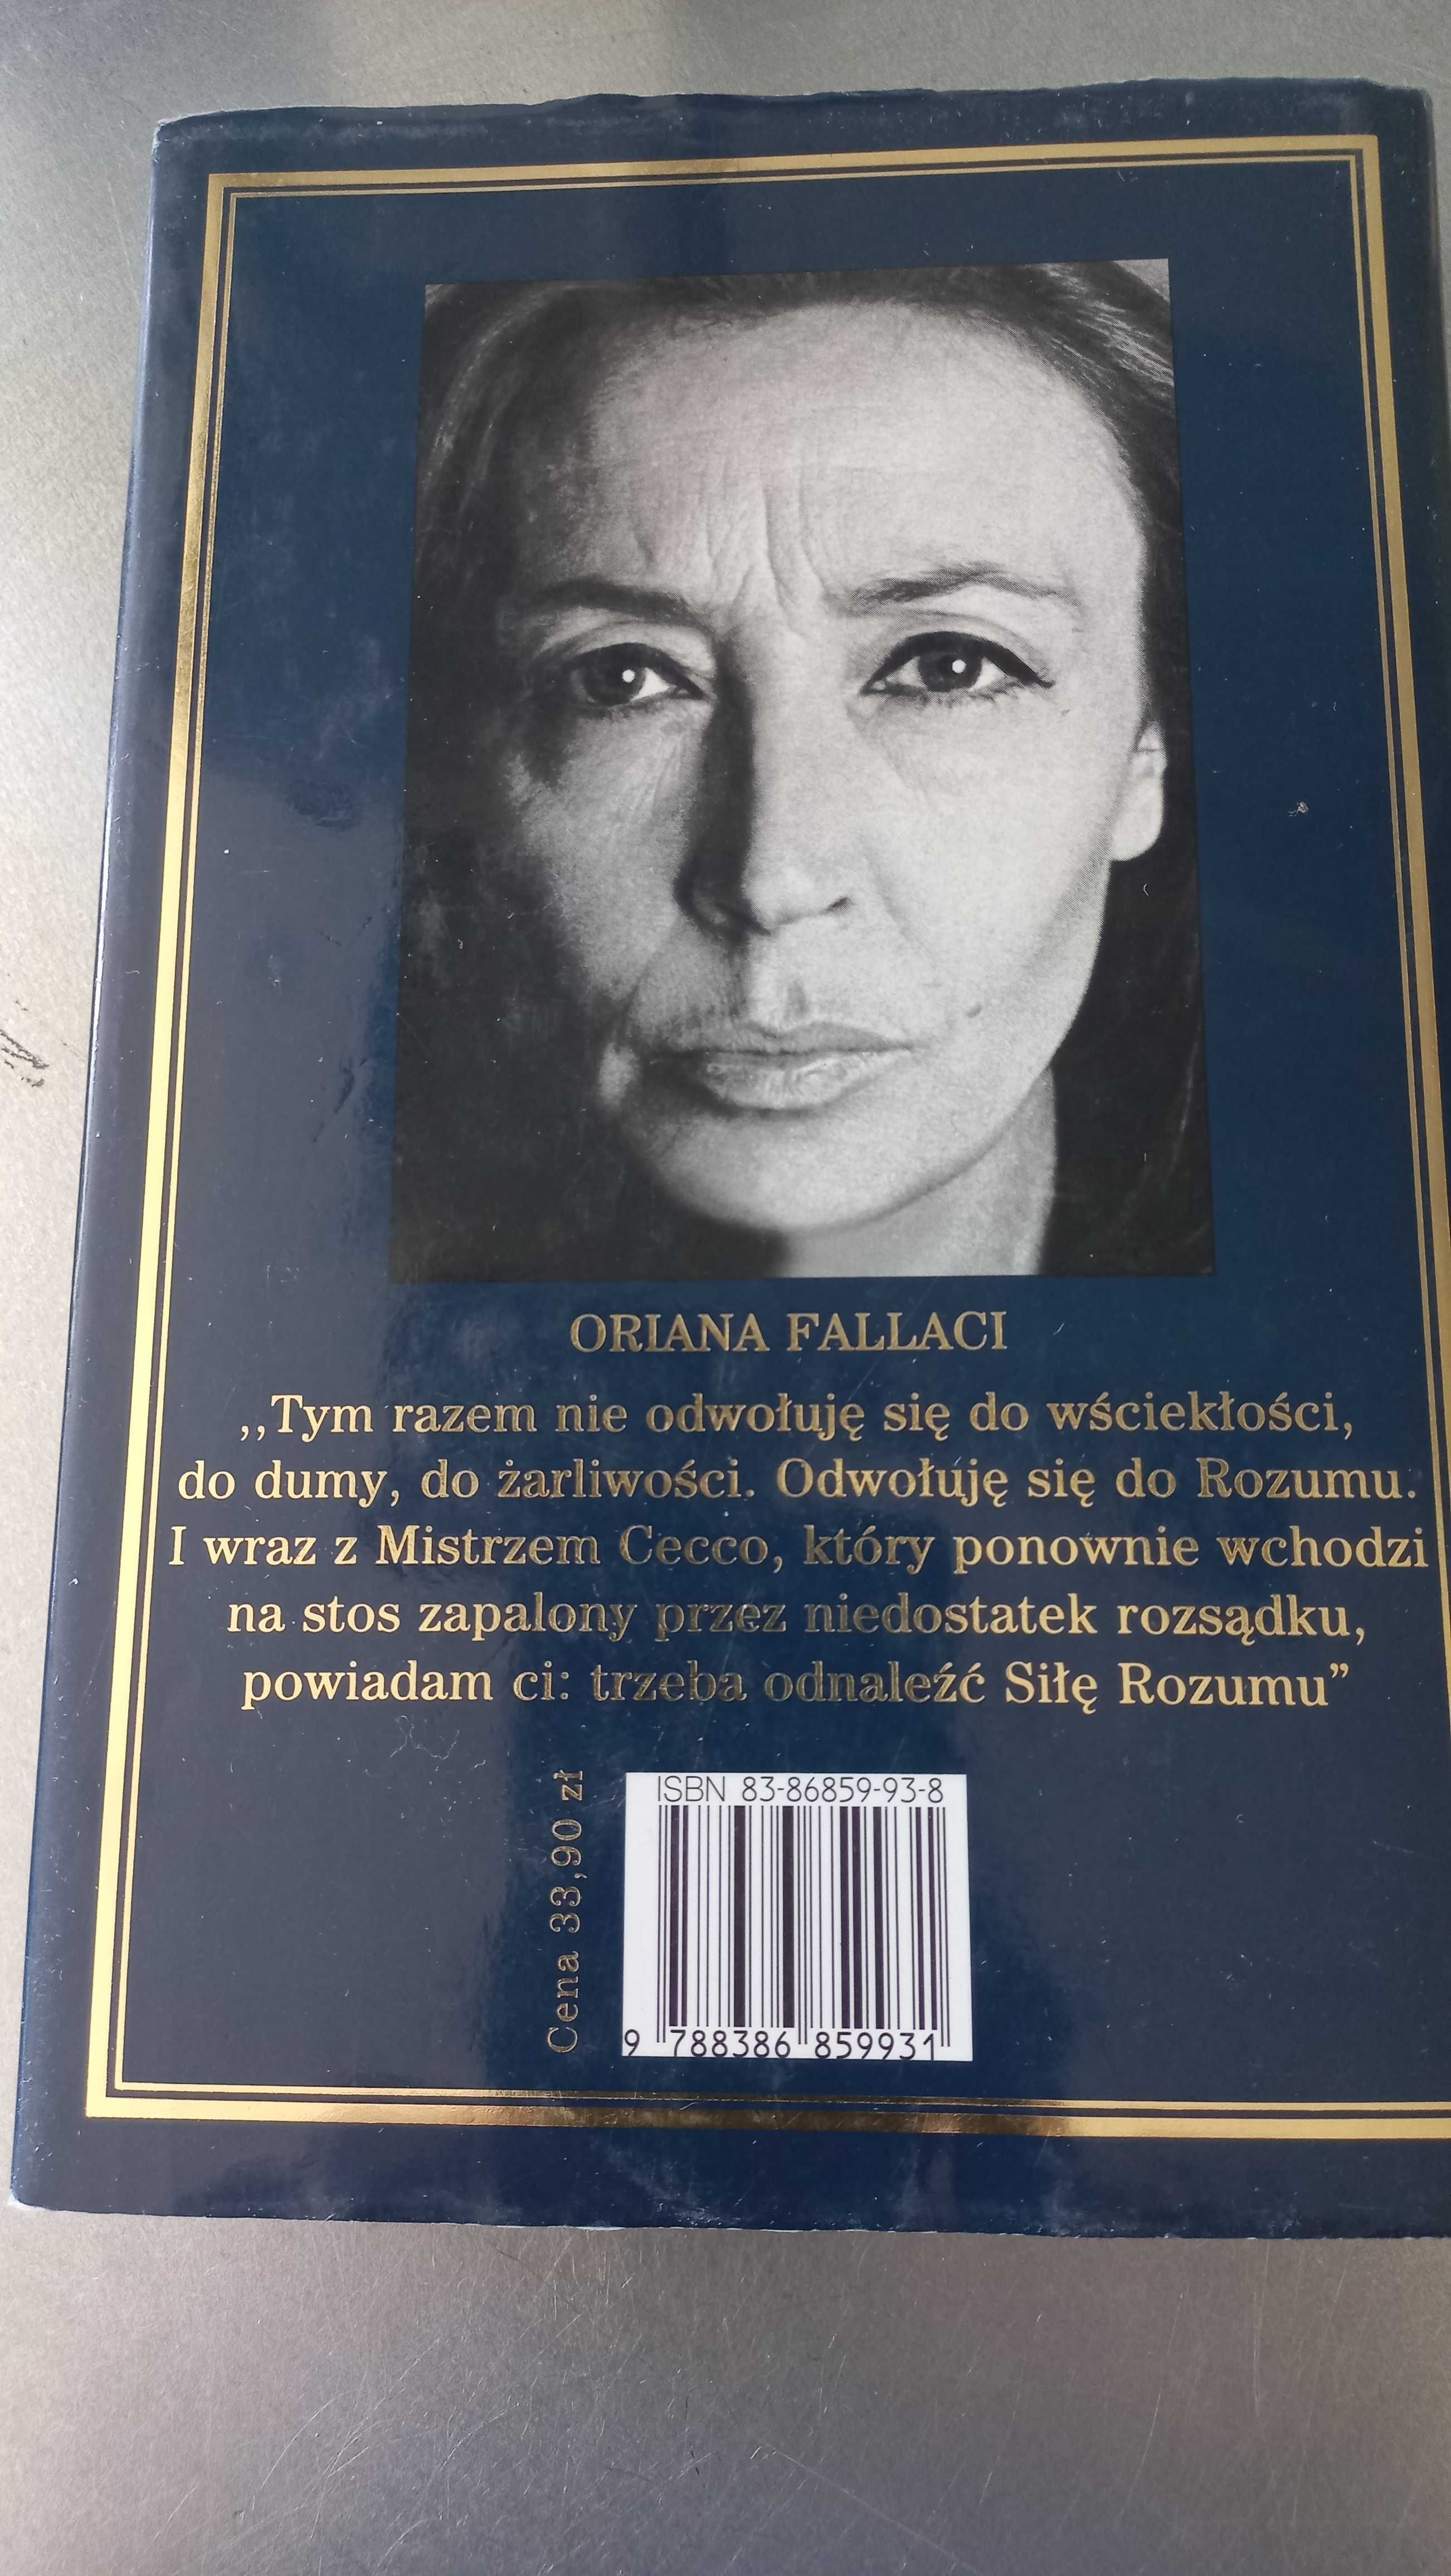 Oriana Fallaci. Siła rozumu